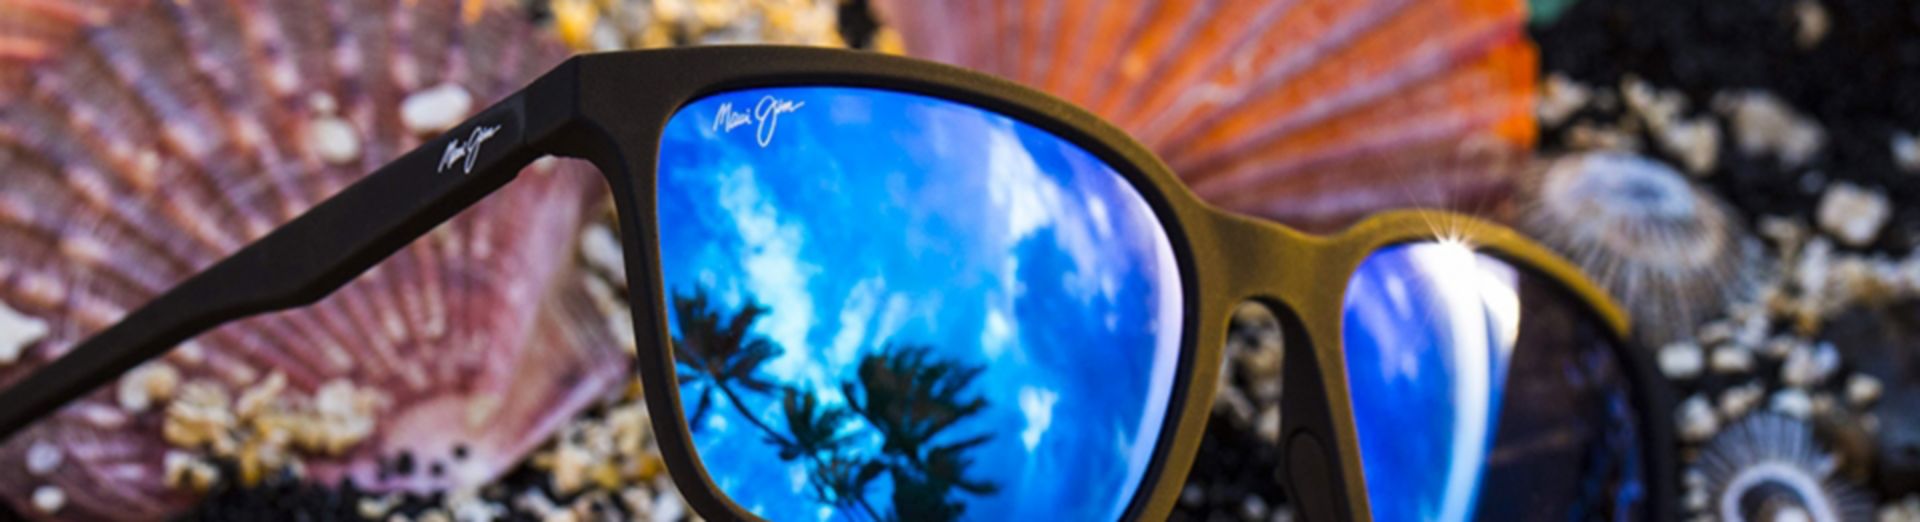 Maui Jim sunglasses with mirroring palm trees